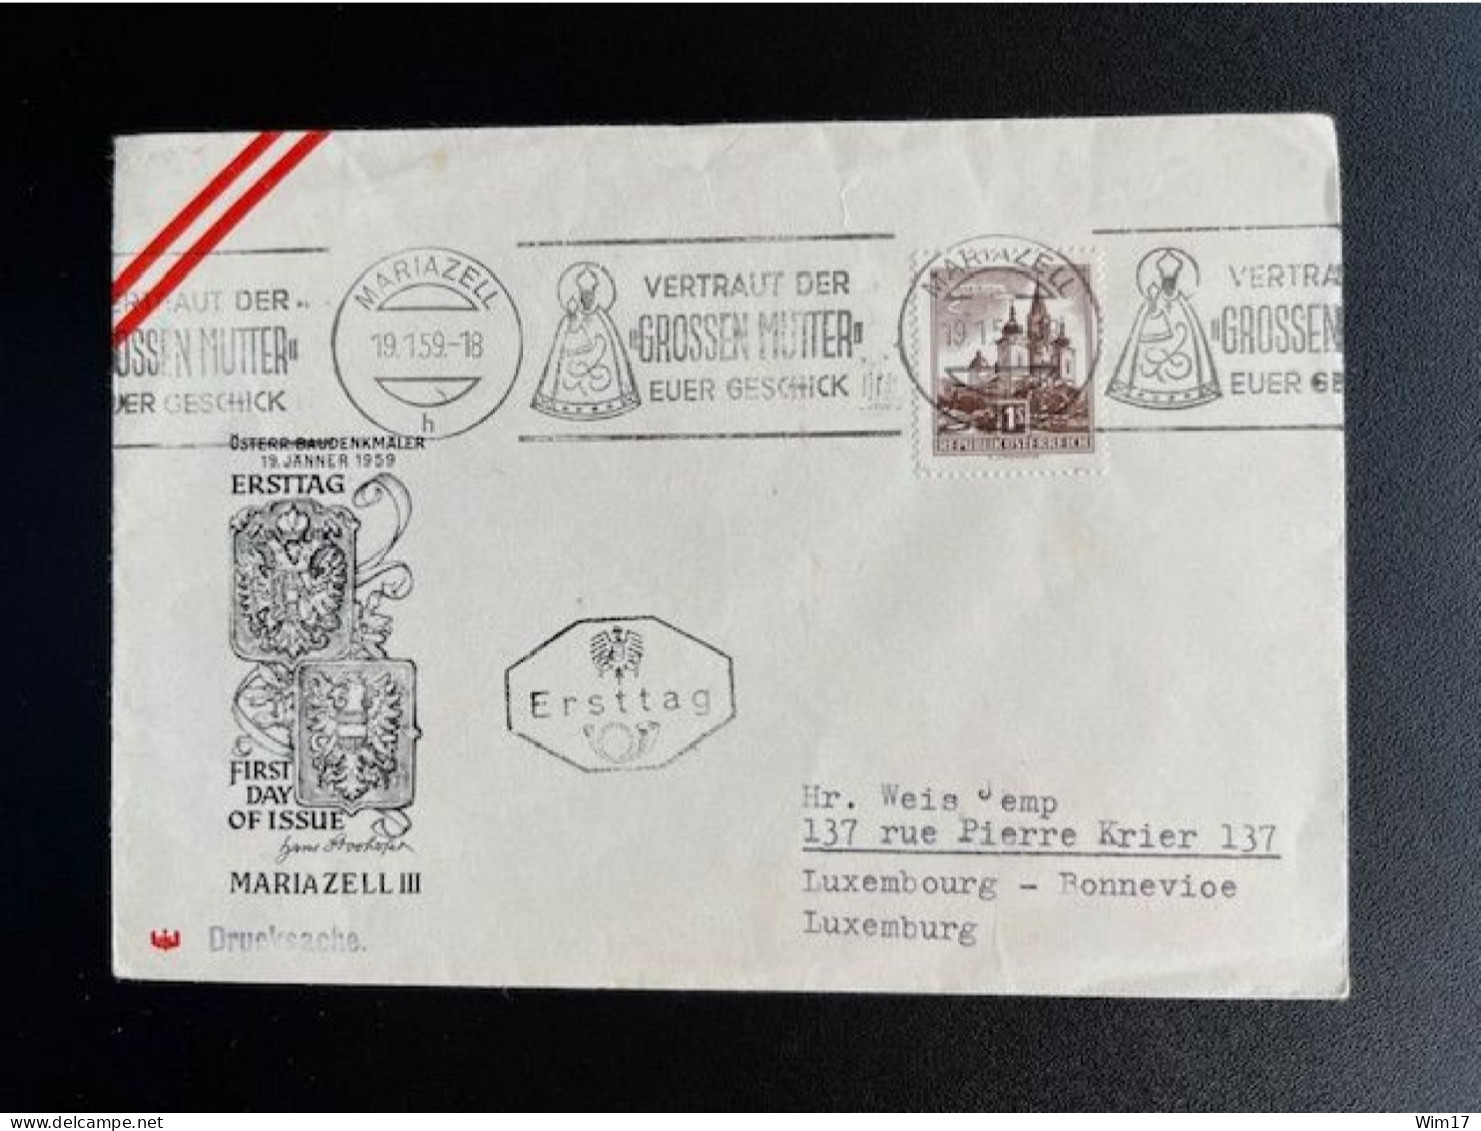 AUSTRIA 1959 LETTER MARIAZELL TO LUXEMBOURG 19-01-1959 OOSTENRIJK OSTERREICH FDC - Briefe U. Dokumente